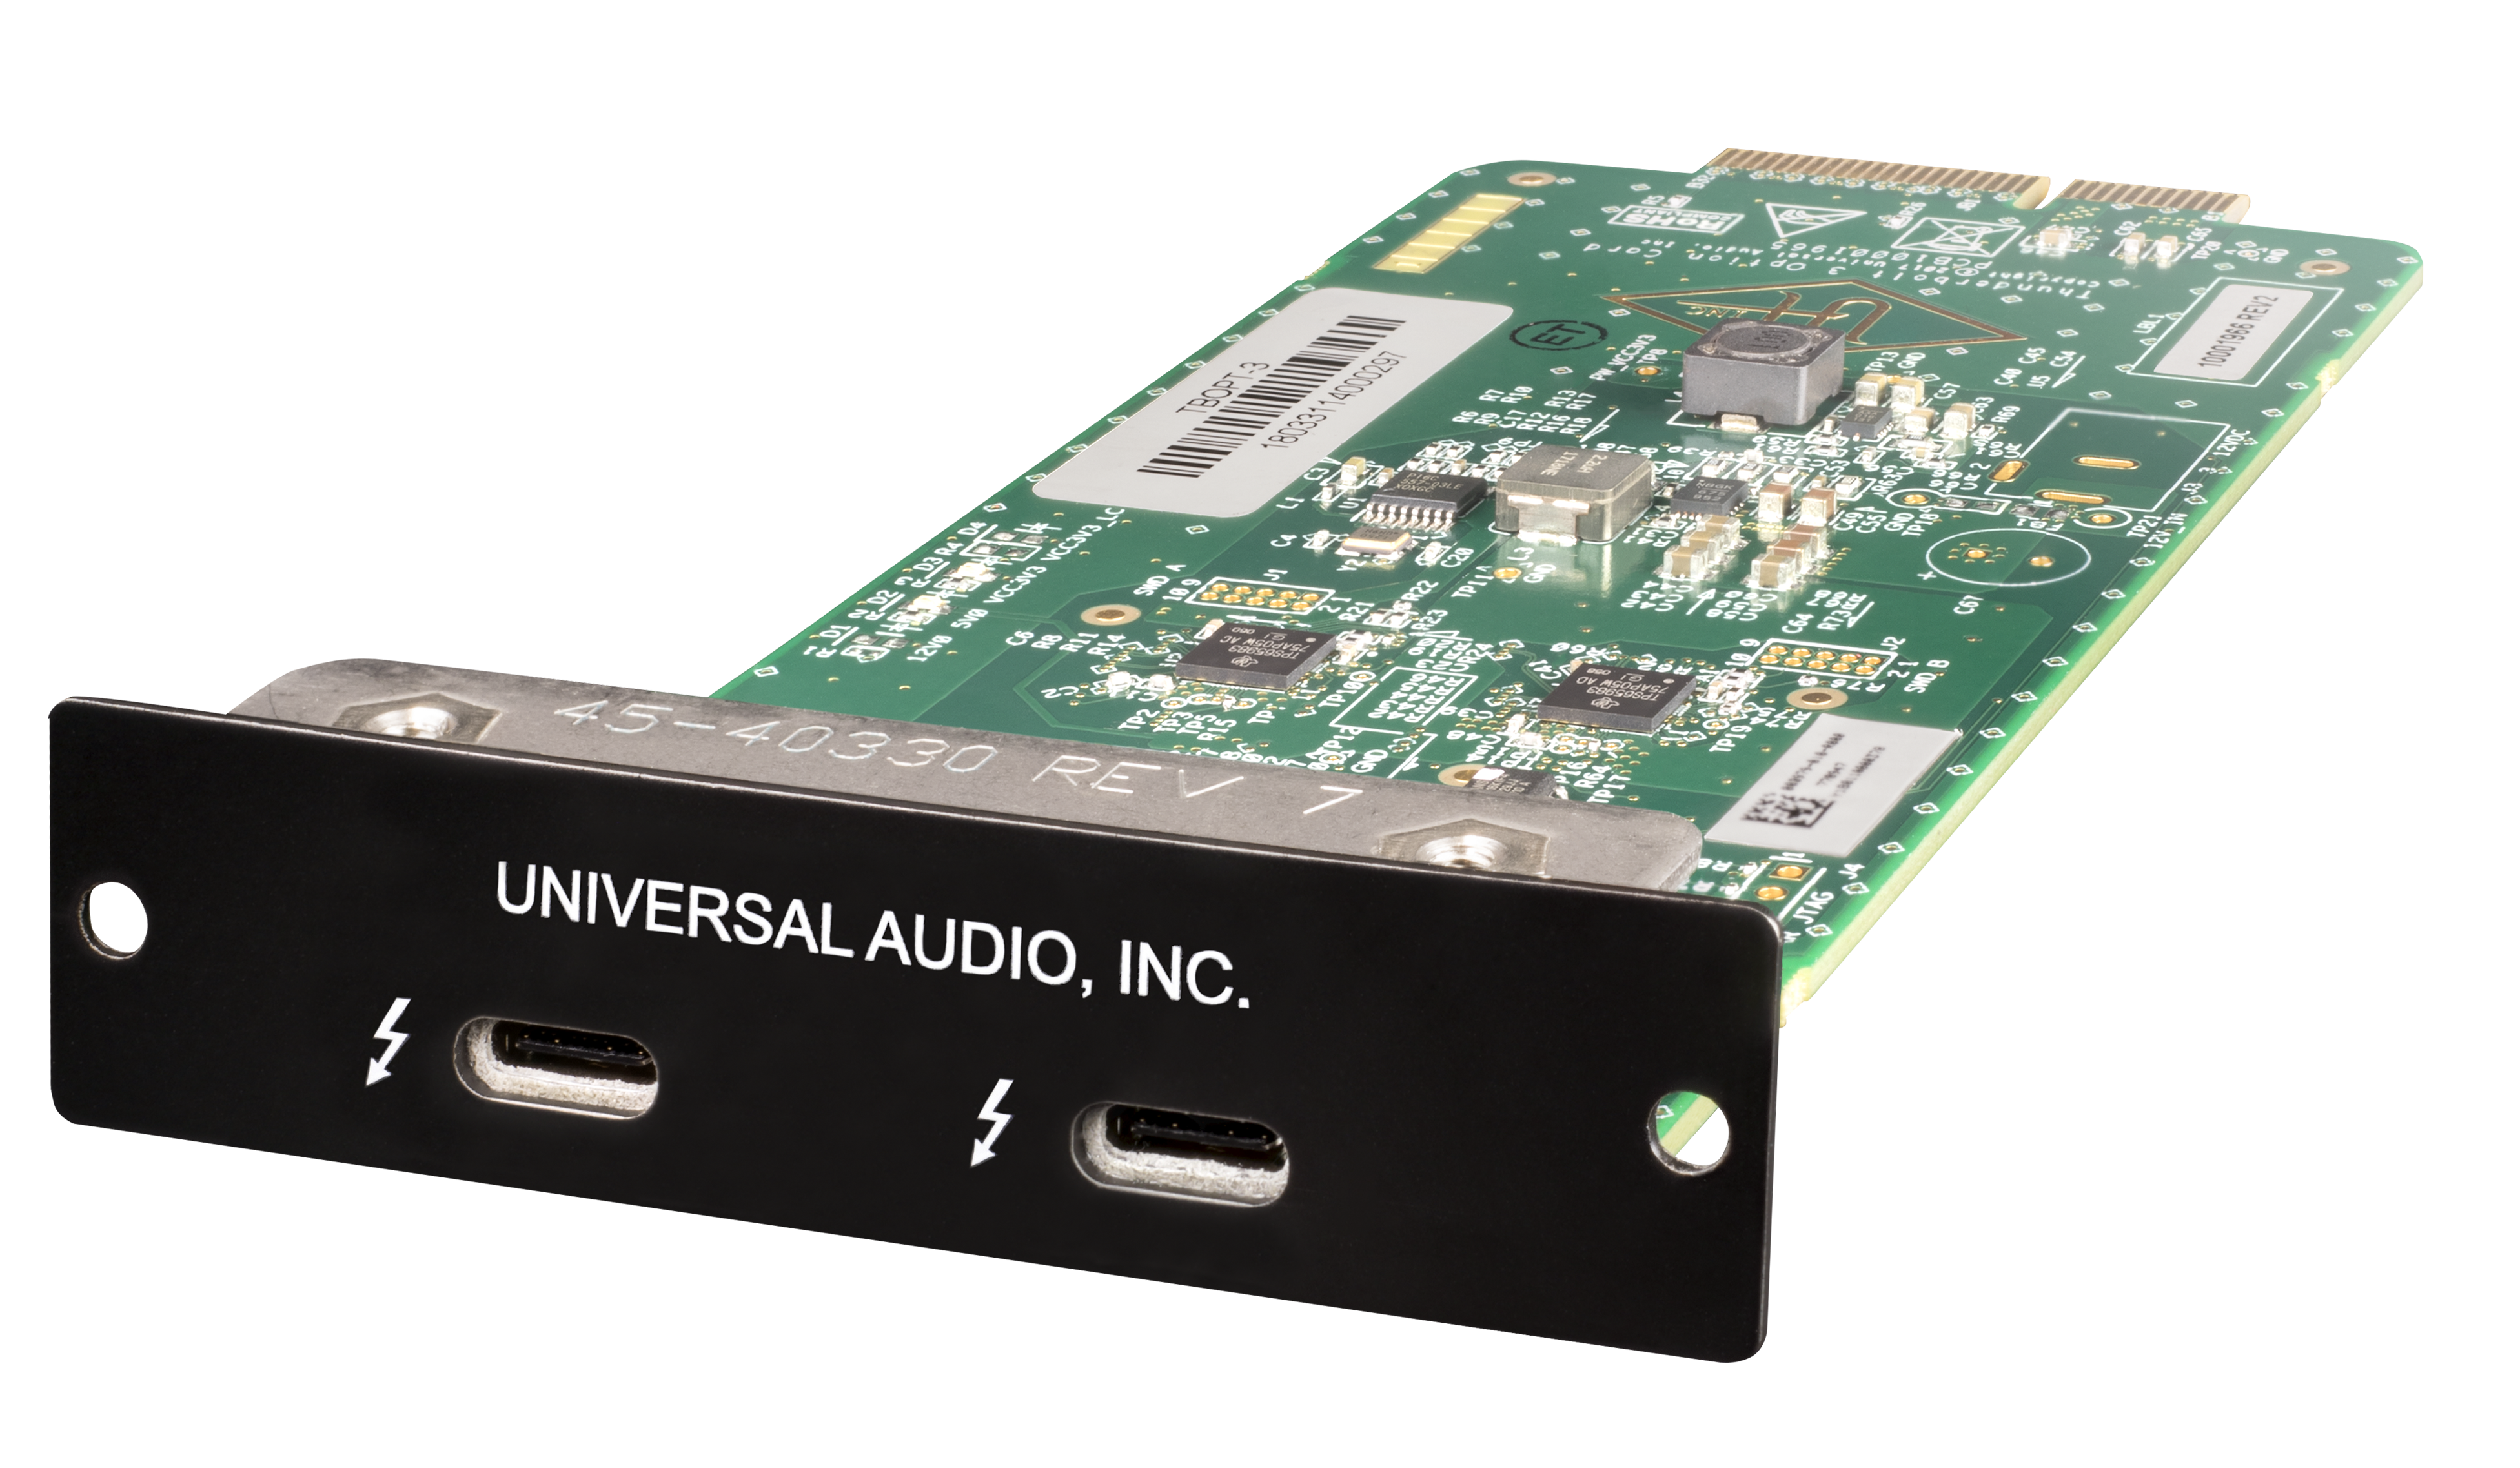 Universal Audio Apollo Thunderbolt 3 Option Card